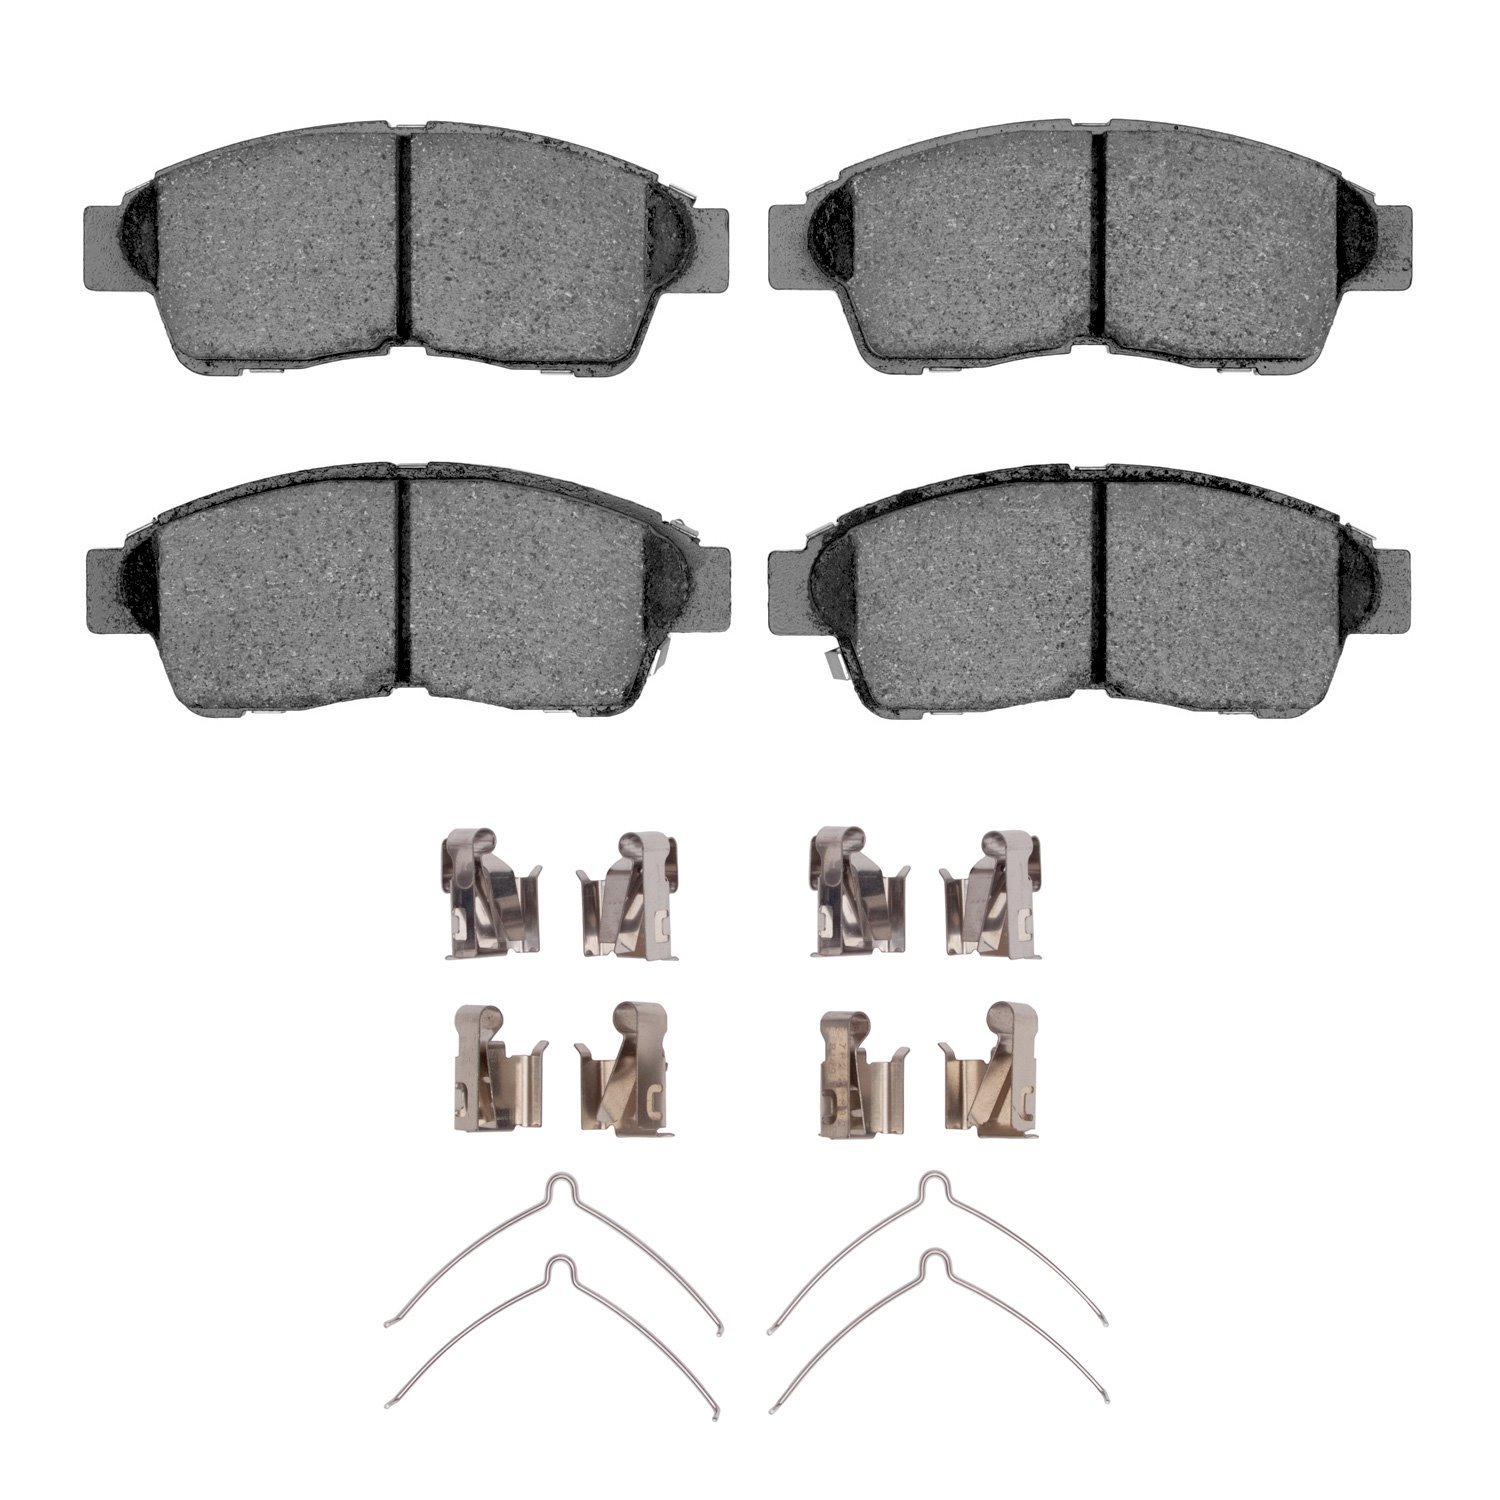 Semi-Metallic Brake Pads & Hardware Kit, 1992-2003 Fits Multiple Makes/Models, Position: Front